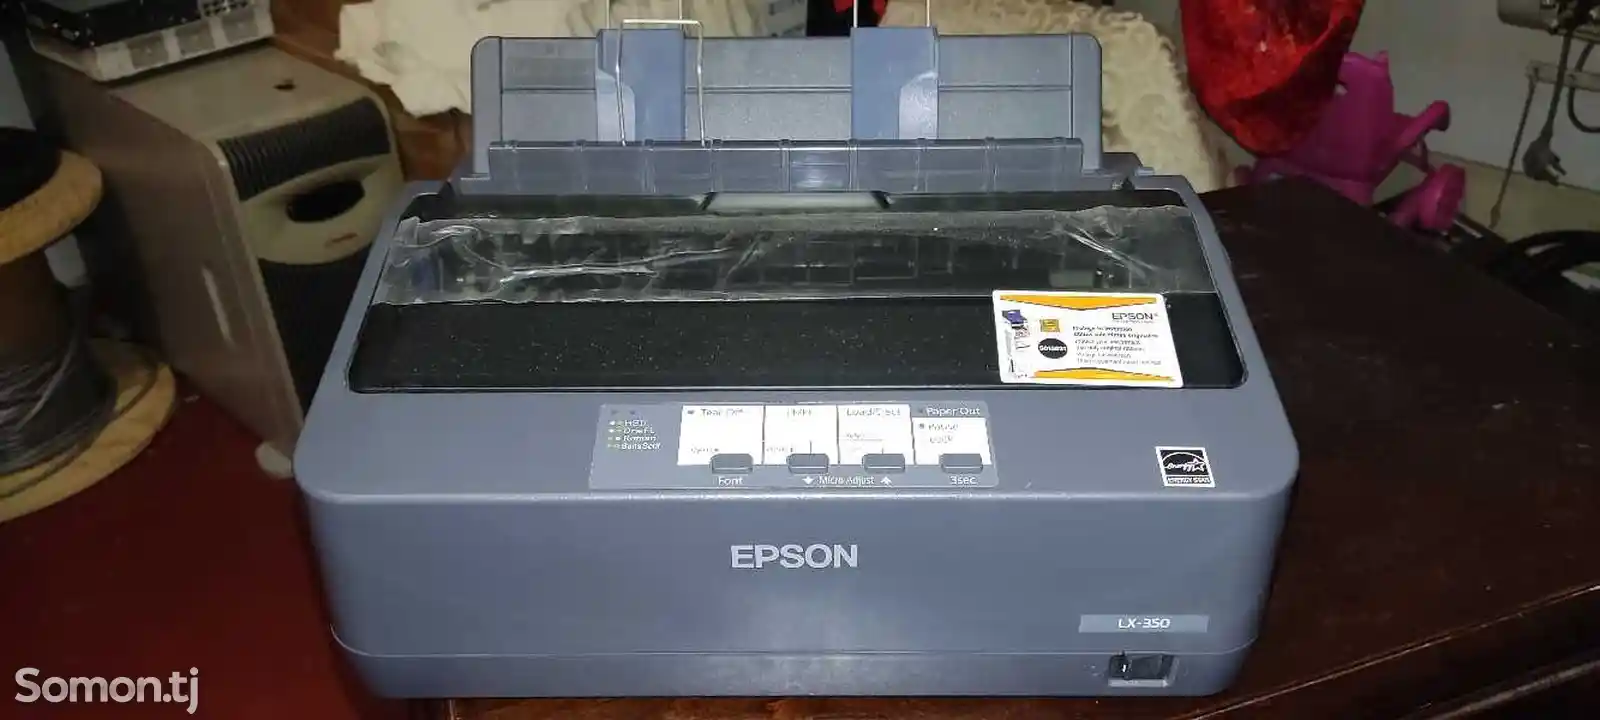 Матричный принтер Epson LX-350-1